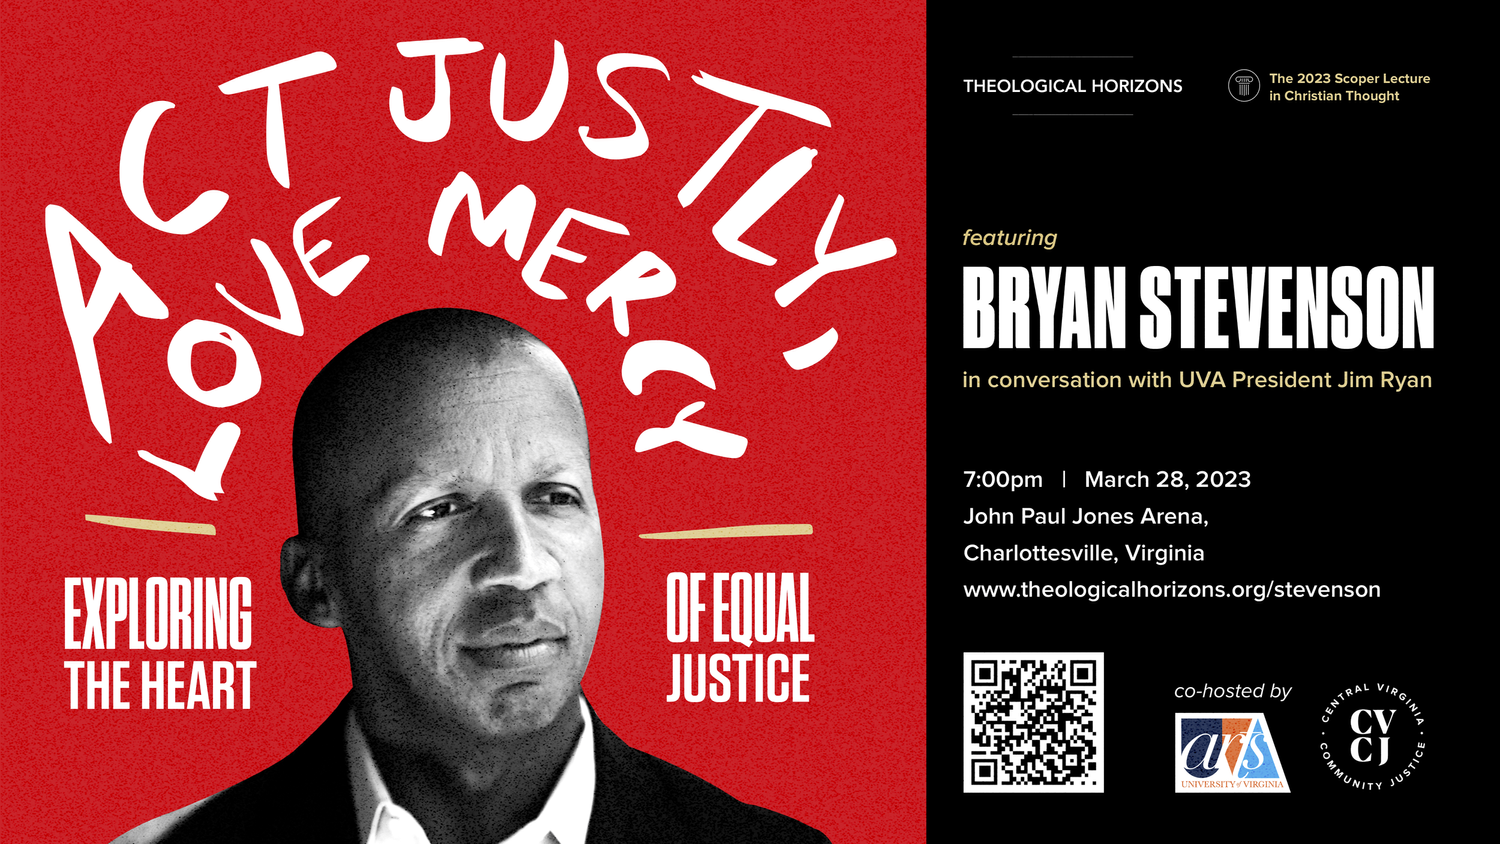 Bryan Stevenson: Act Justly, Love Mercy